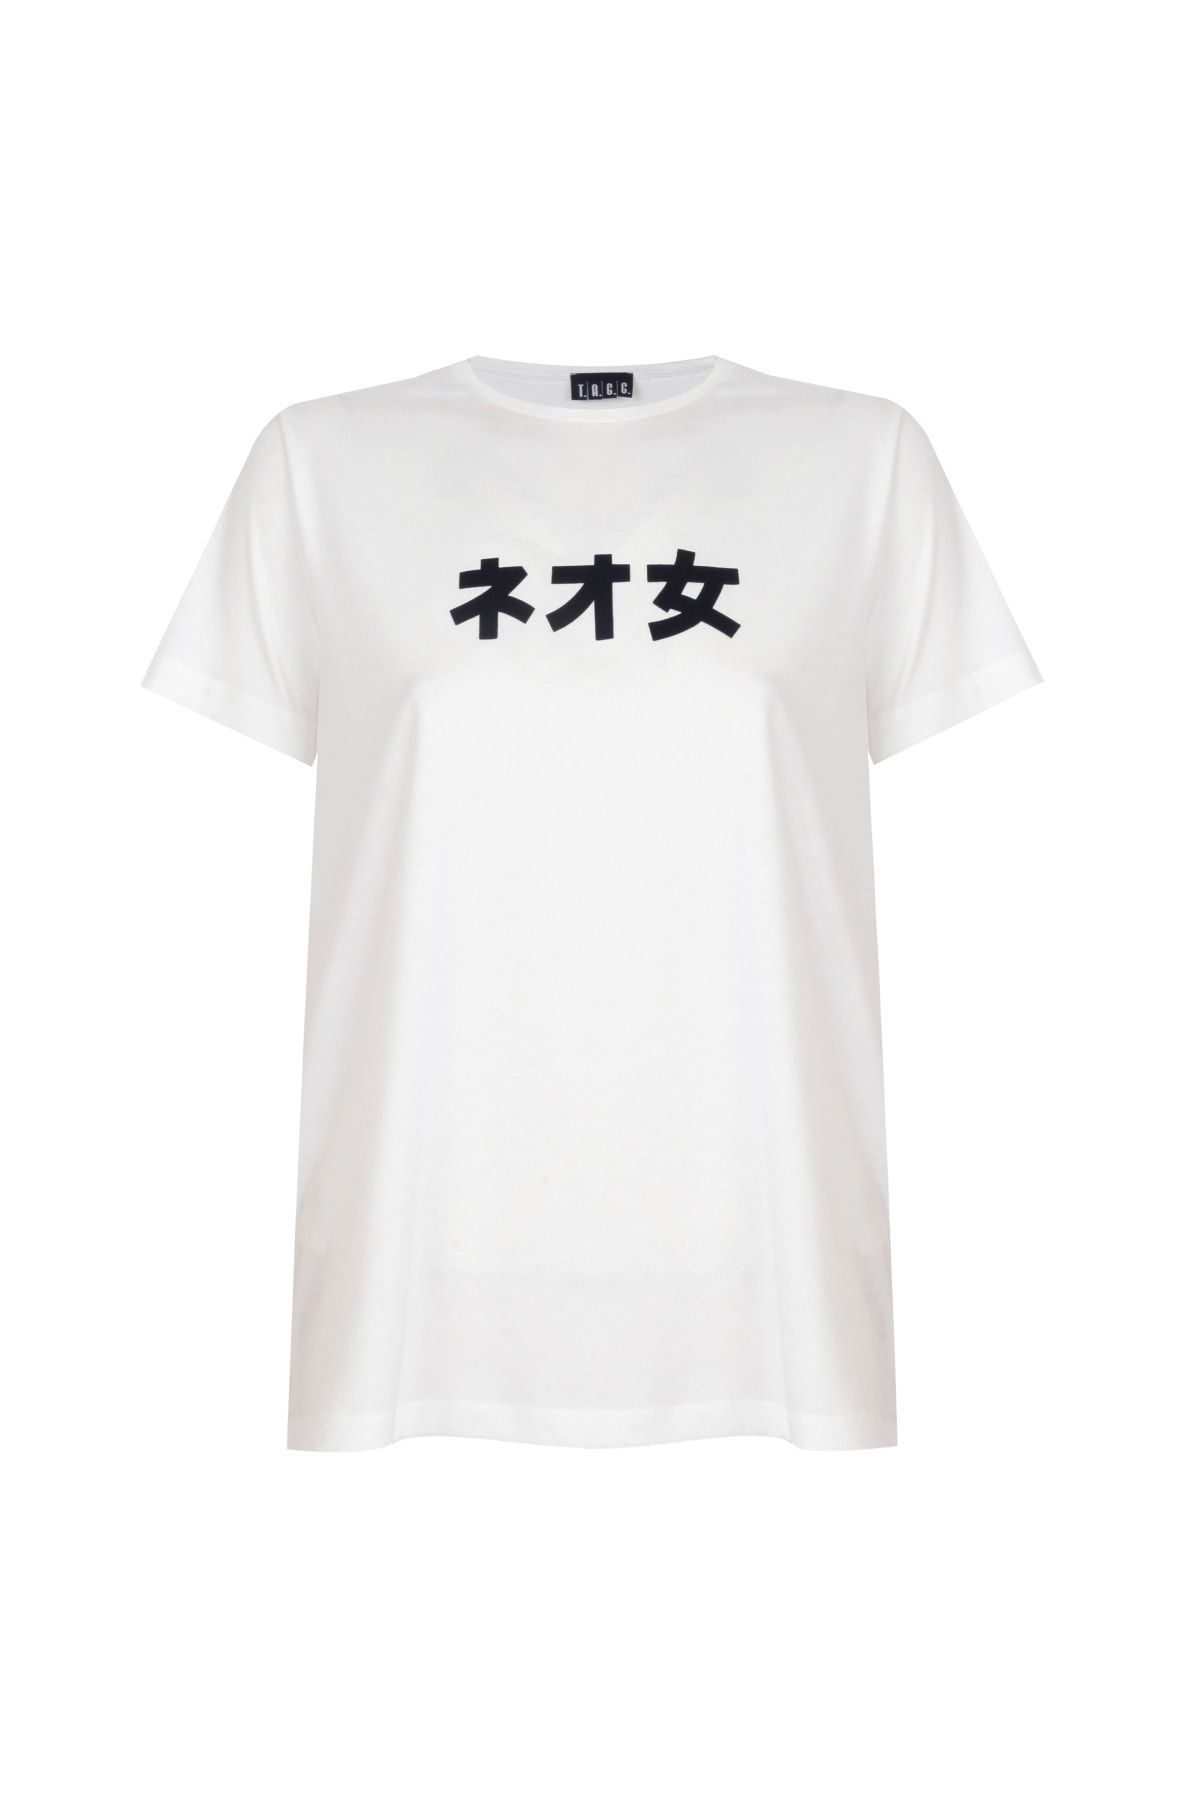 TAGG Neo Woman Baskılı T-shirt